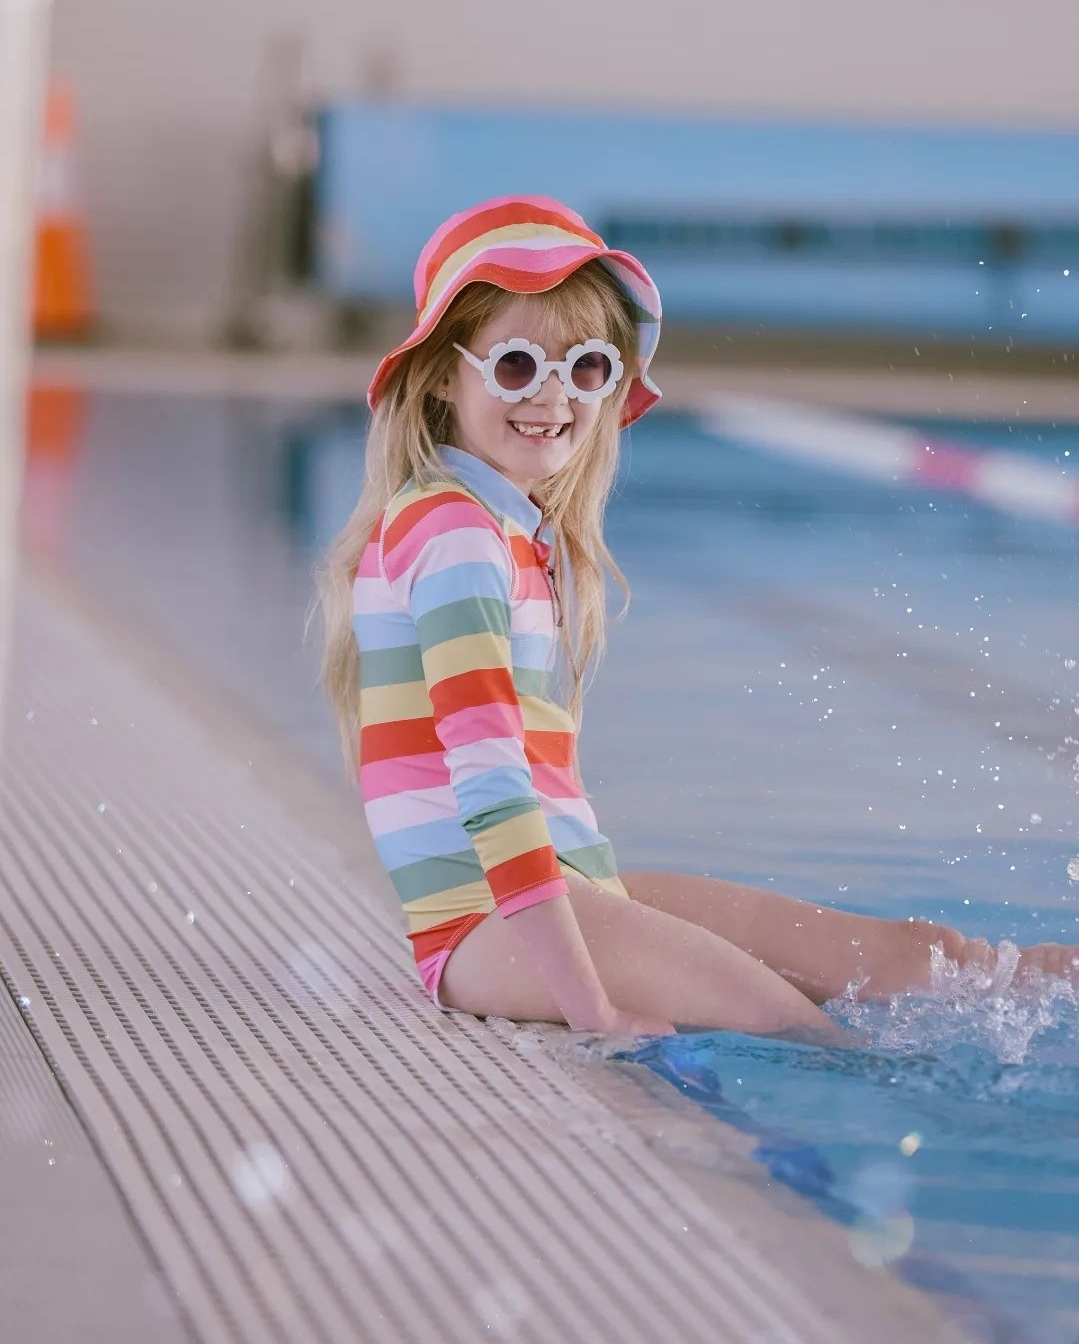 Korango | Swimwear Rainbow Zip Swimsuit | Rainbow Stripe